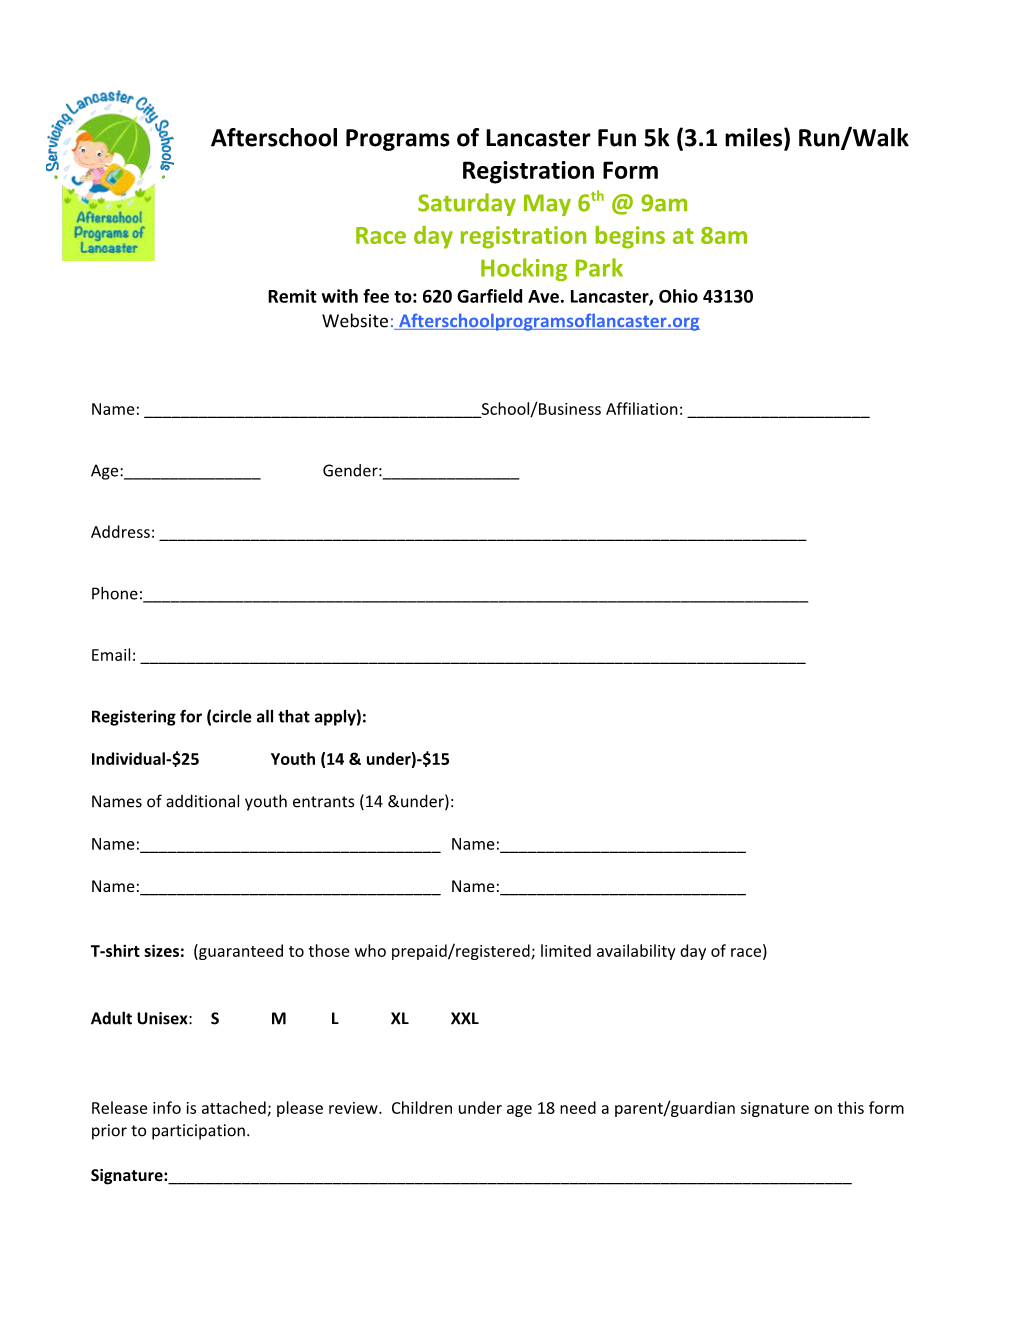 Afterschool Programs of Lancaster Fun 5K (3.1 Miles) Run/Walk Registration Form